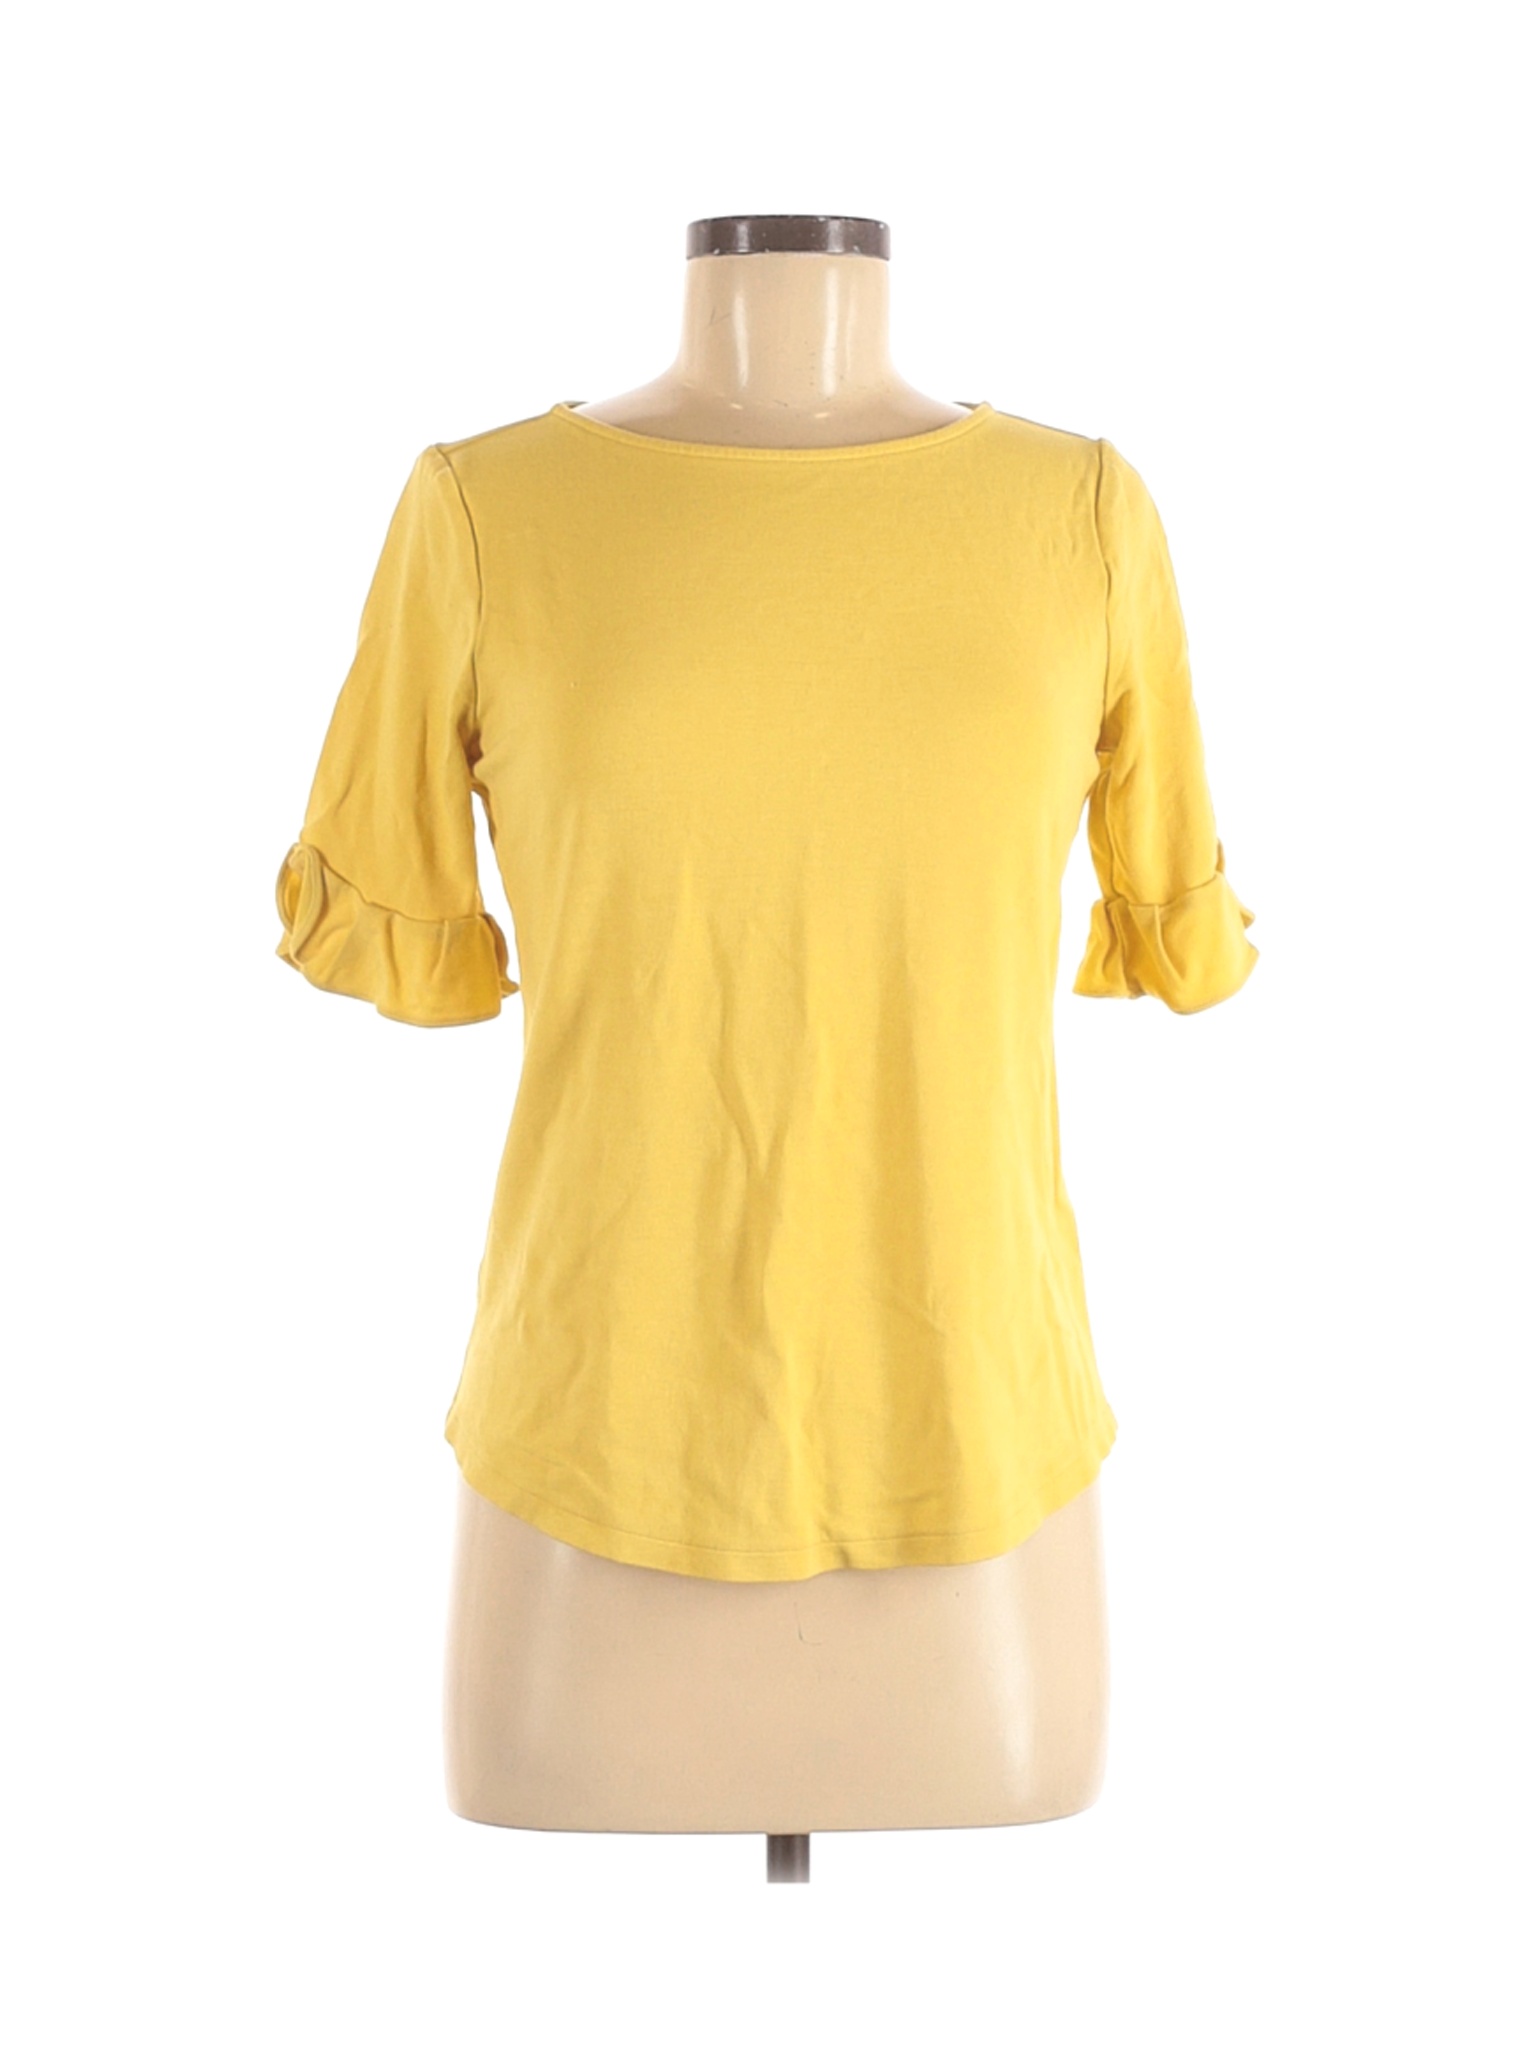 Ann Taylor Factory Women Yellow Short Sleeve Top S | eBay